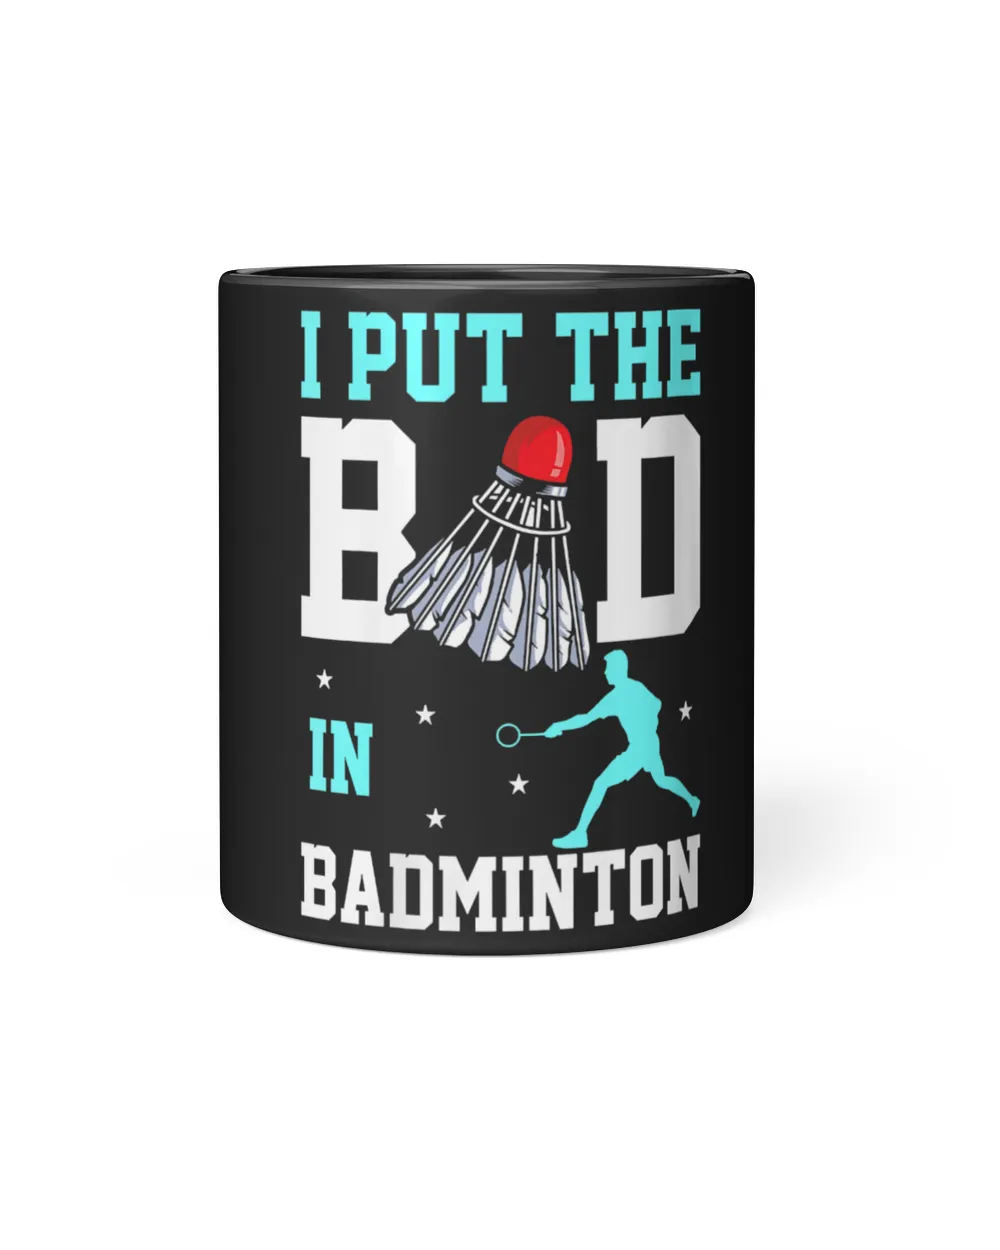 Womens Funny Badminton Design - I Put The Bad In Badminton V-Neck T-Shirt